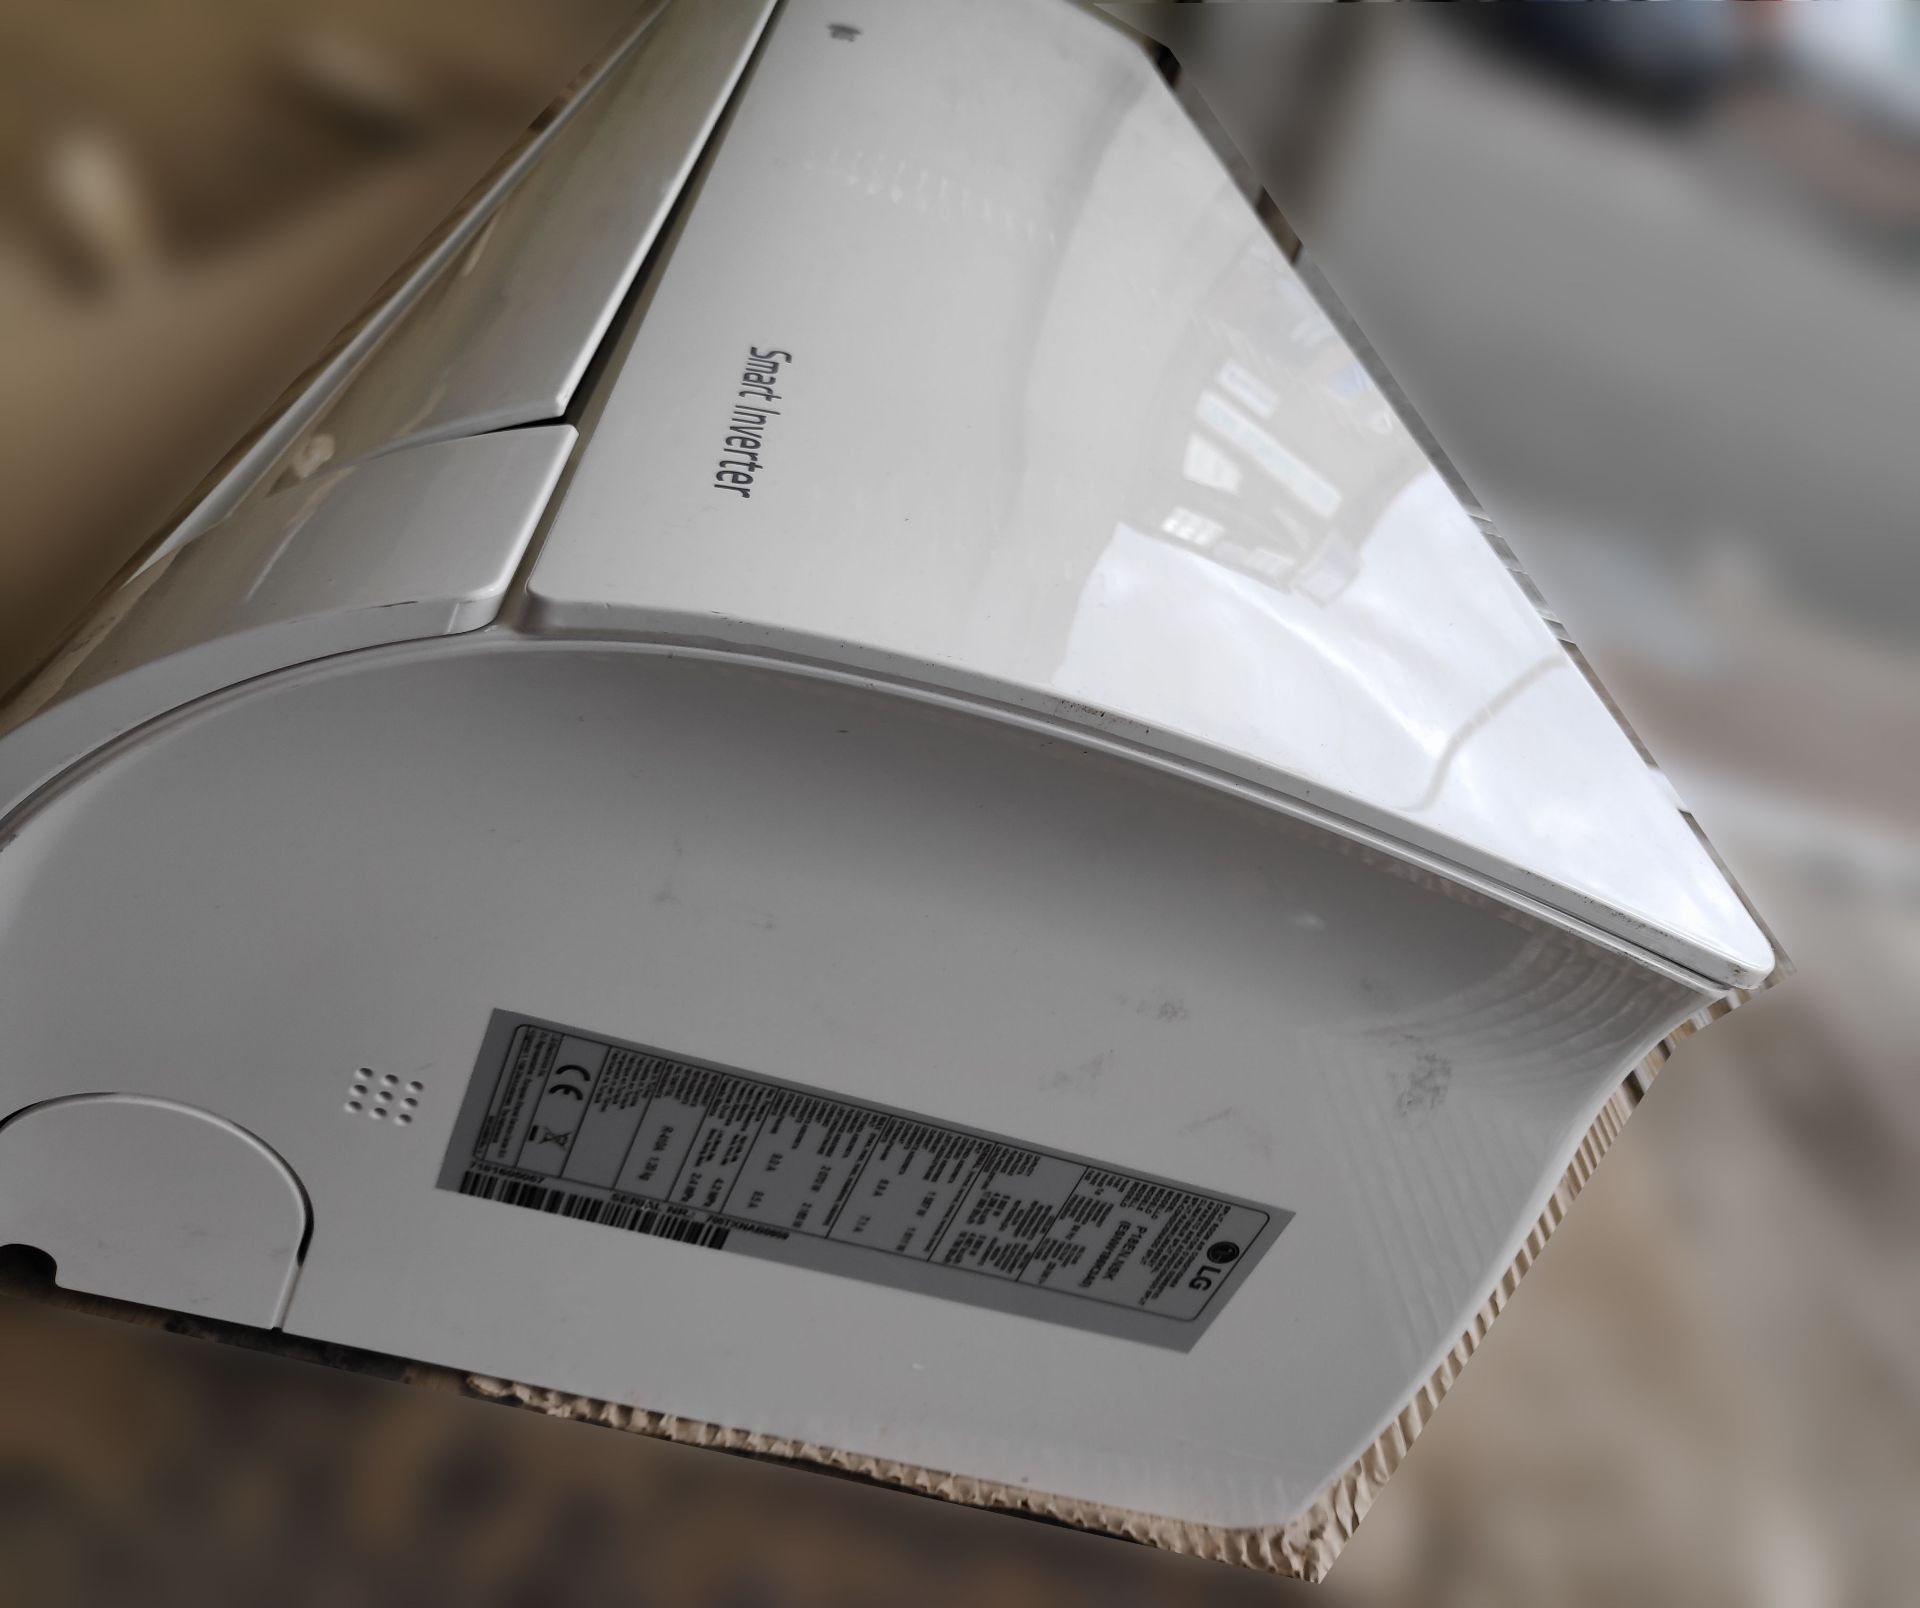 1 x LG Wall Mounted Air Conditioner Smart Inverter Indoor Unit - Model P18EN.NSK - JMCS116 - - Image 6 of 10